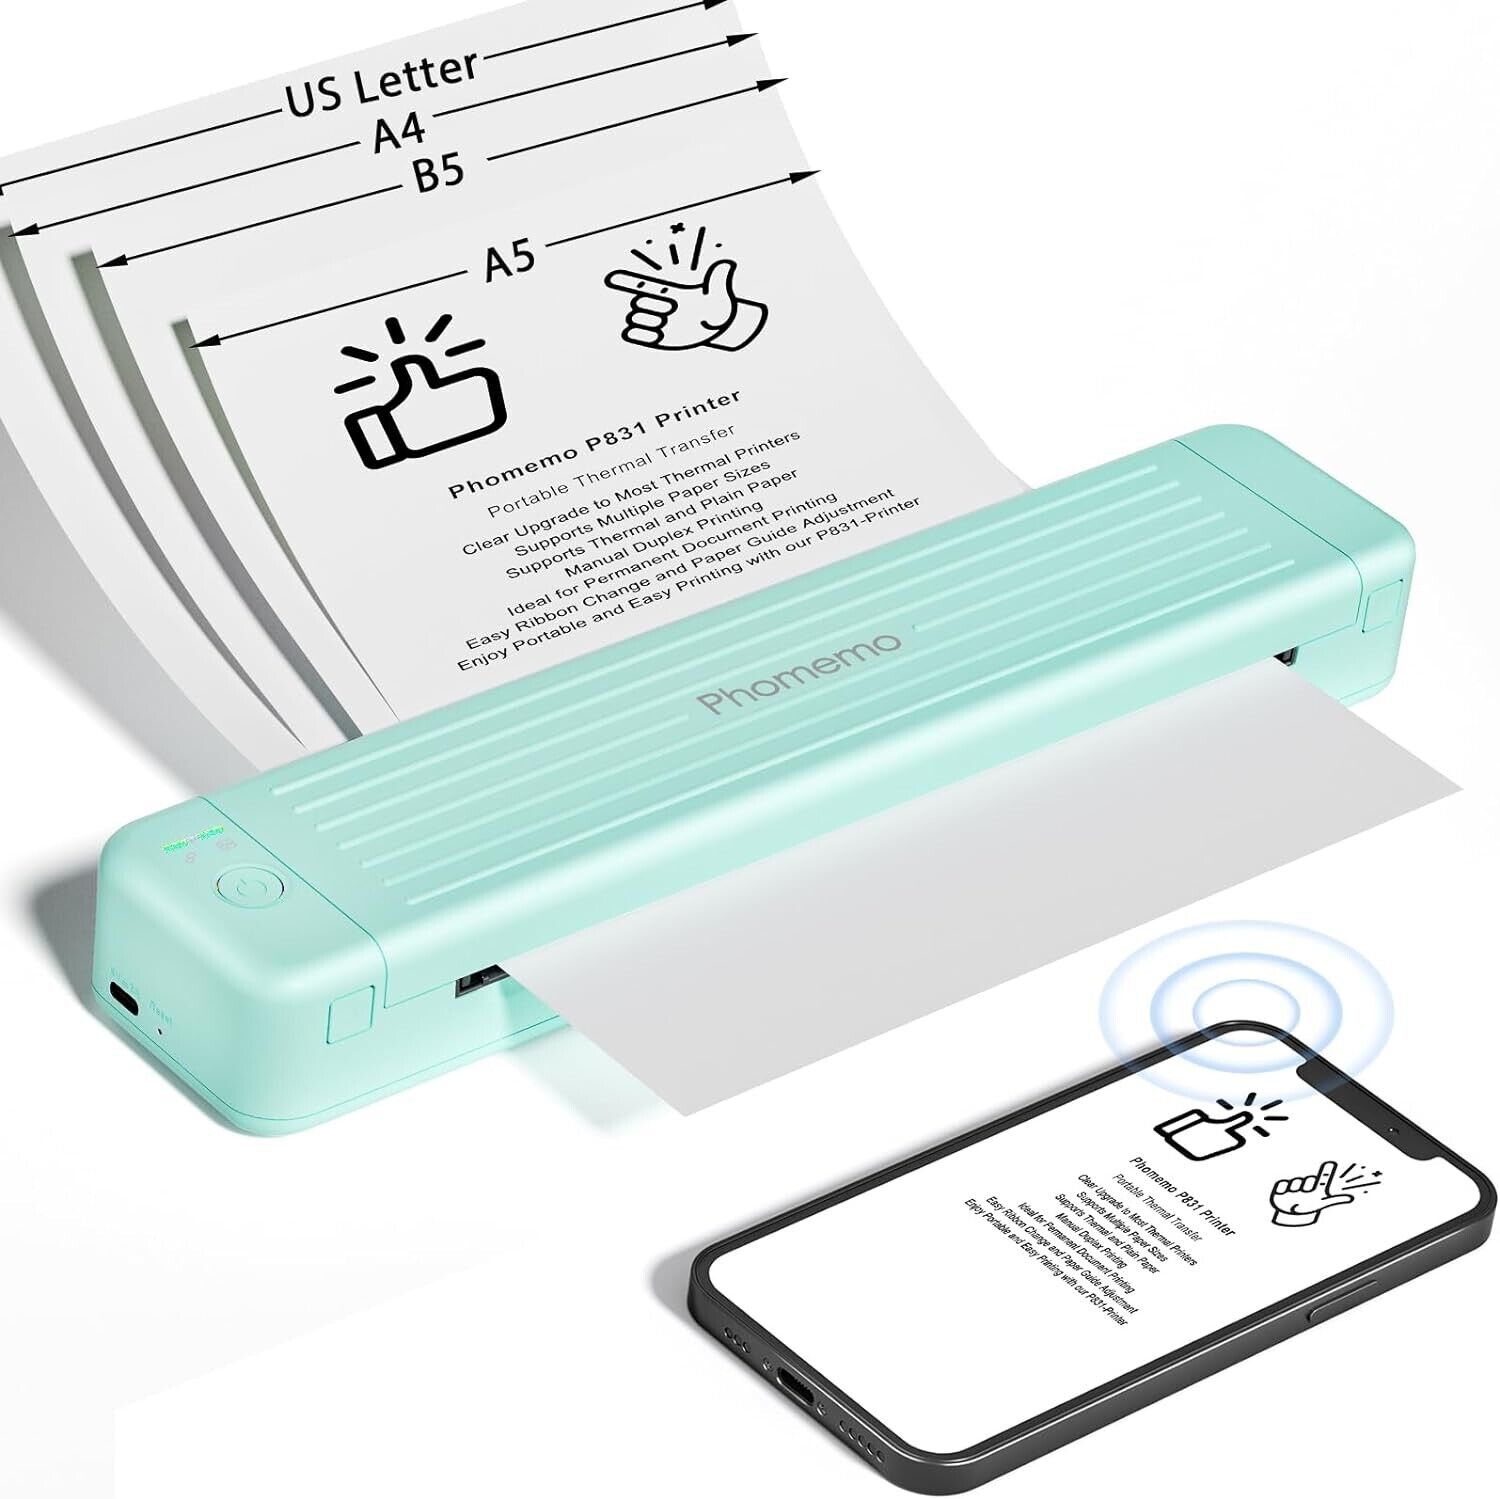 Phomemo Portable Printers Wireless for Travel #3693